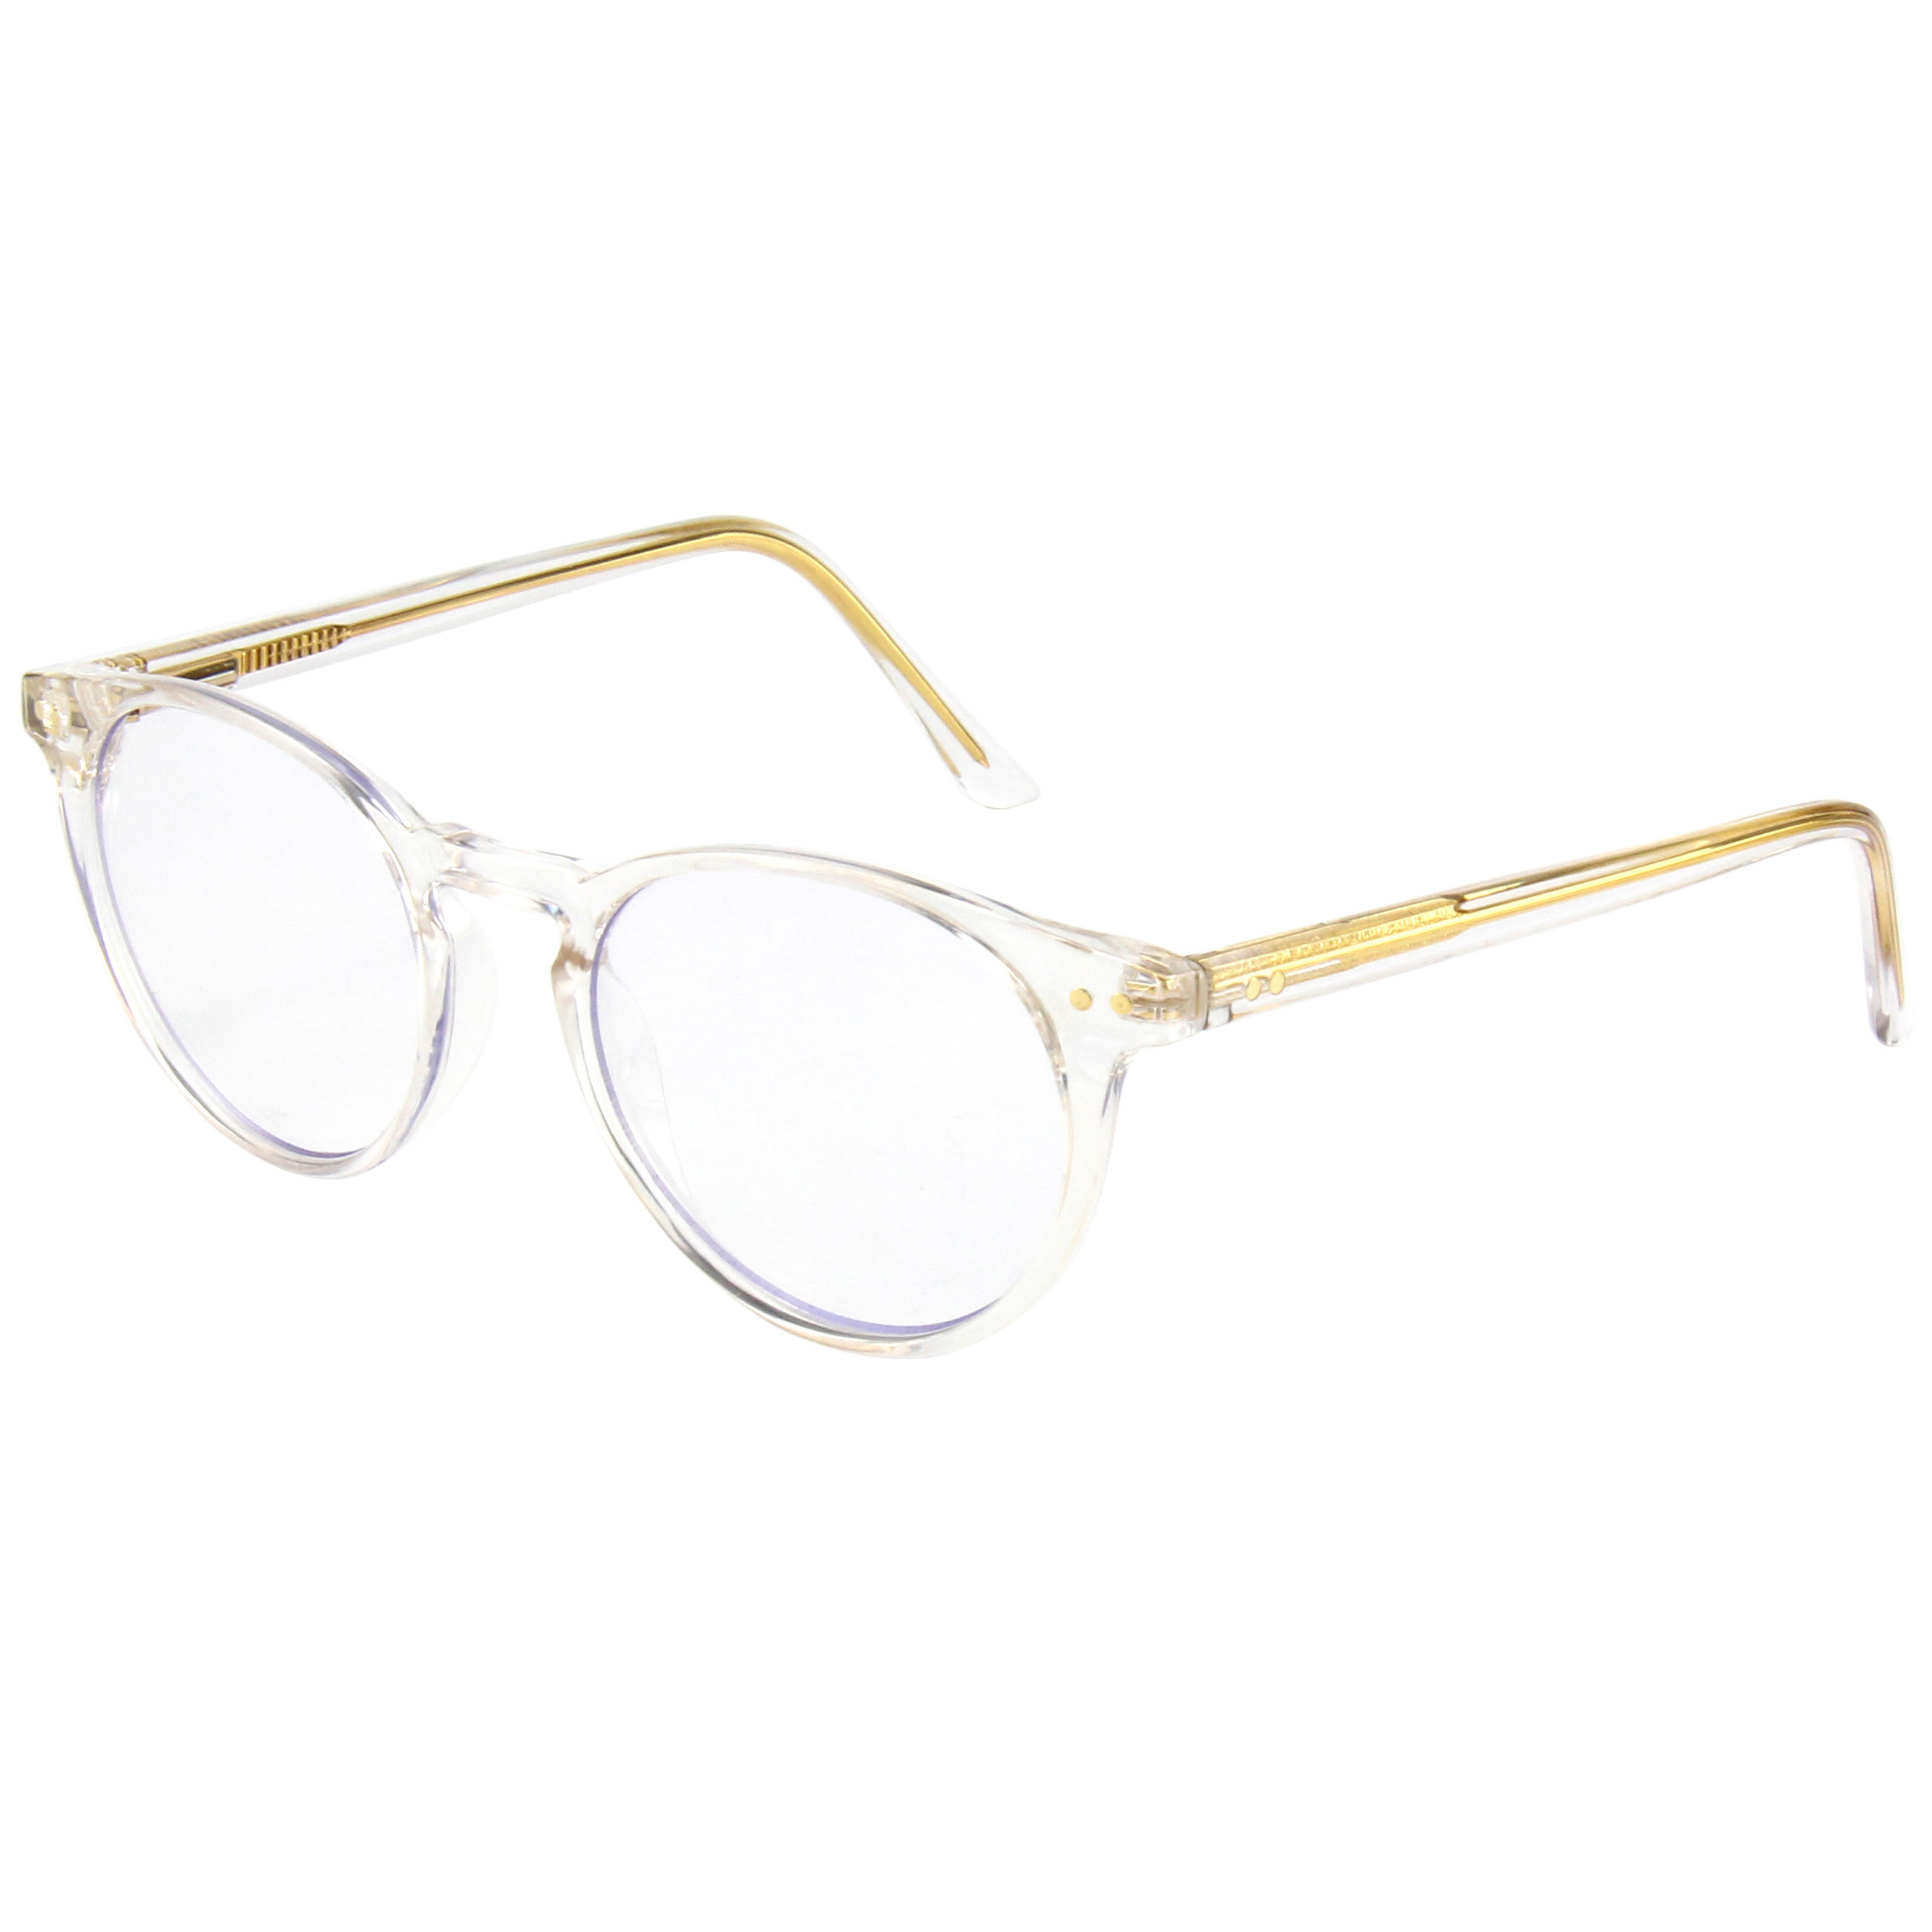 Eugenia fashion optical glasses overseas market For optical frame glasses-2